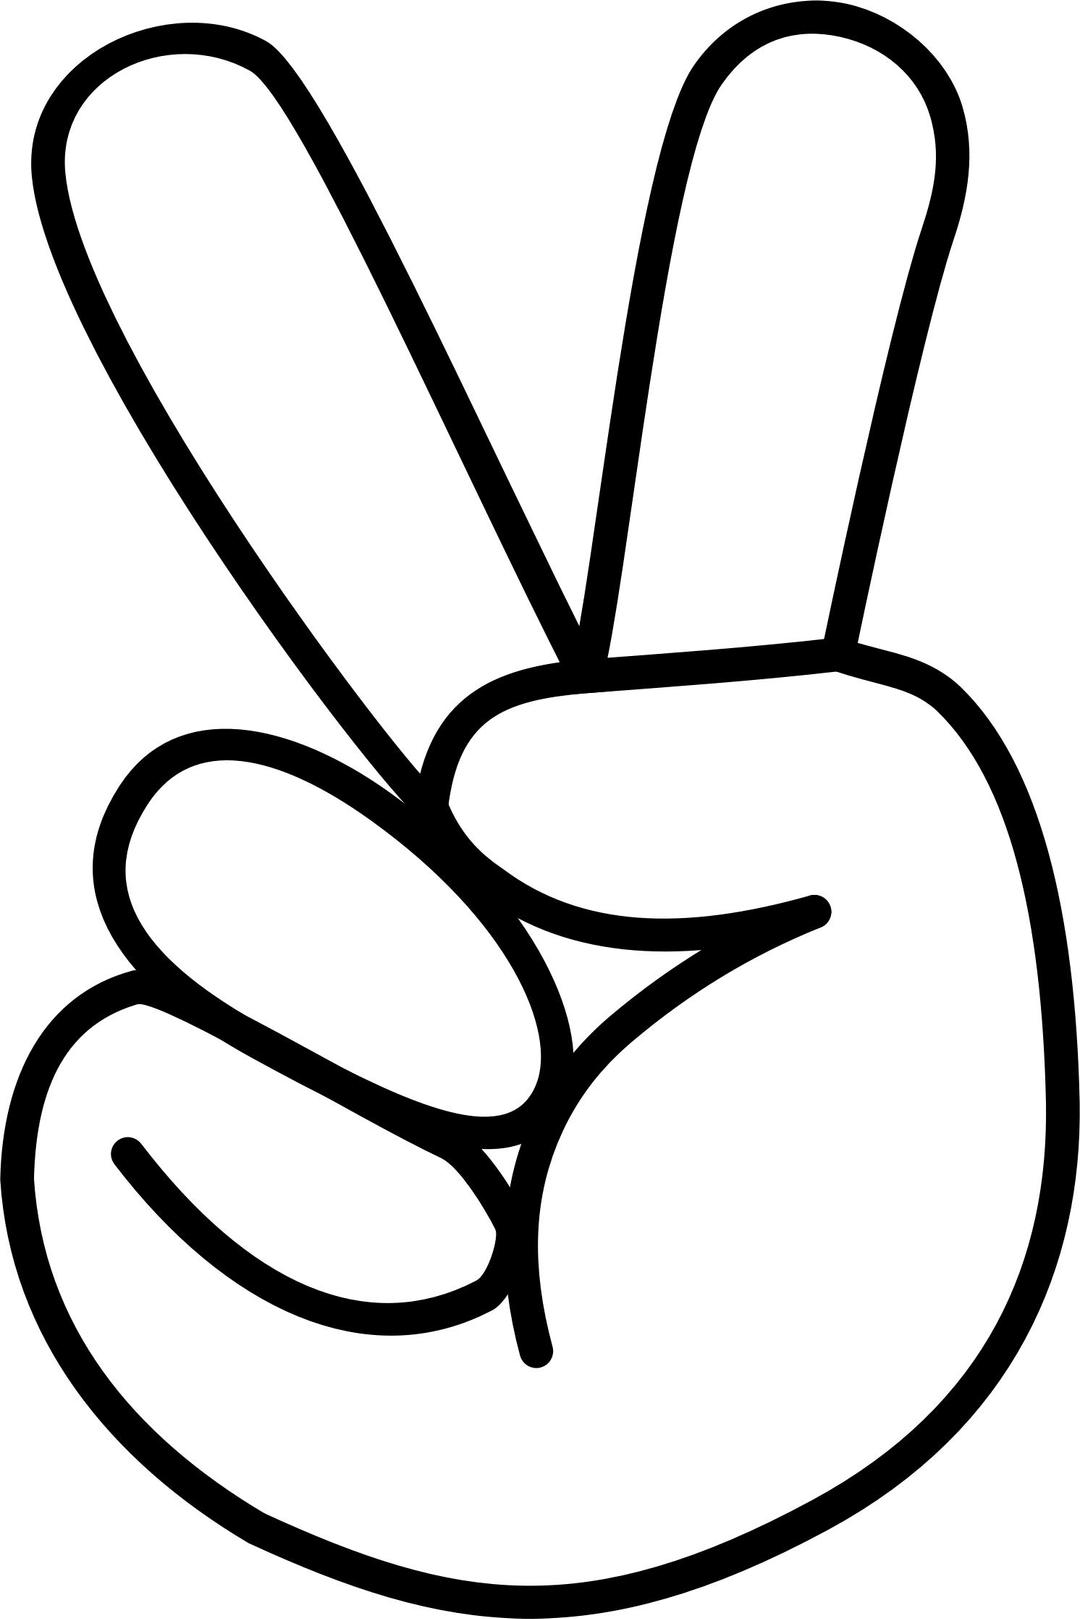 Comic Hand Peace Sign png transparent